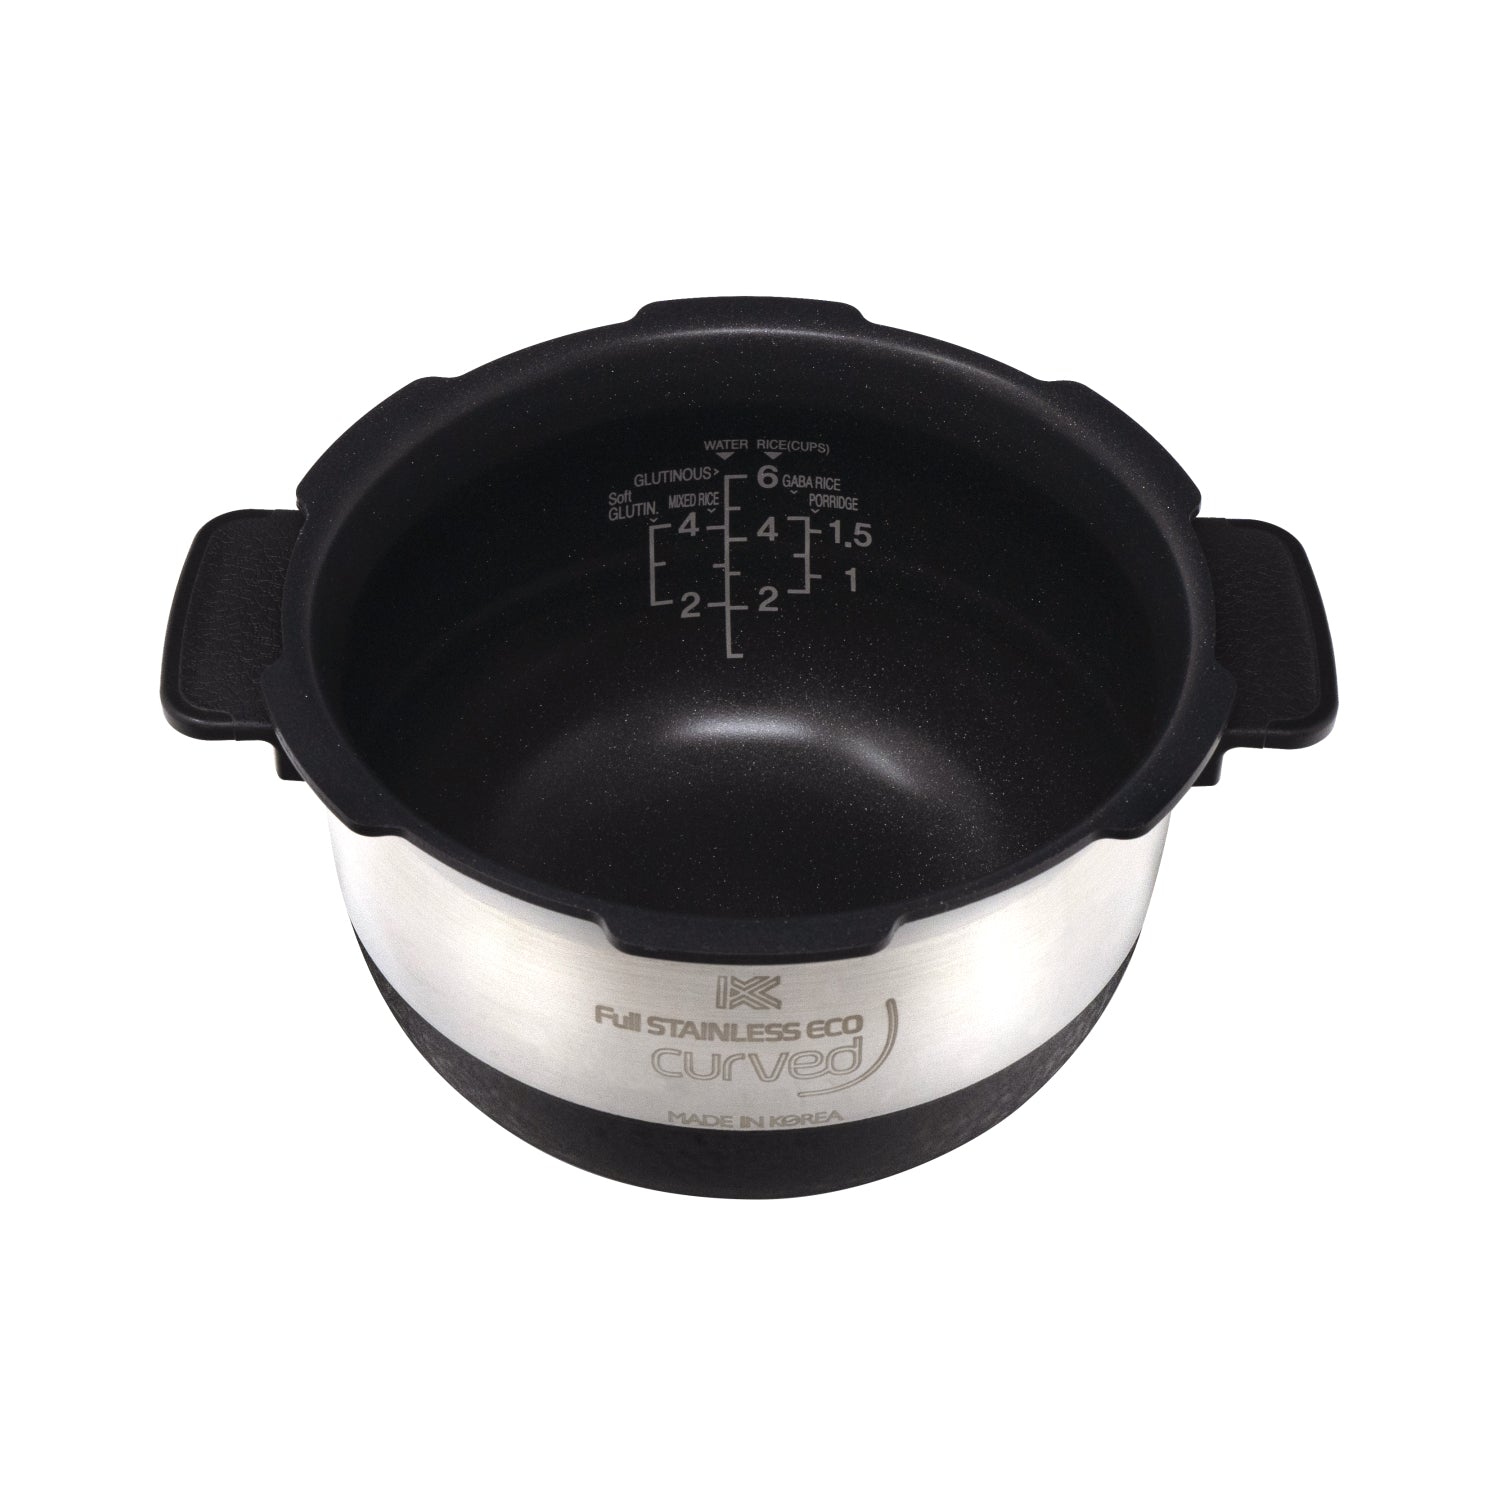 CUCKOO Inner Pot for CRP-HJXS0810FI Pressure Rice Cooker HJXS0810